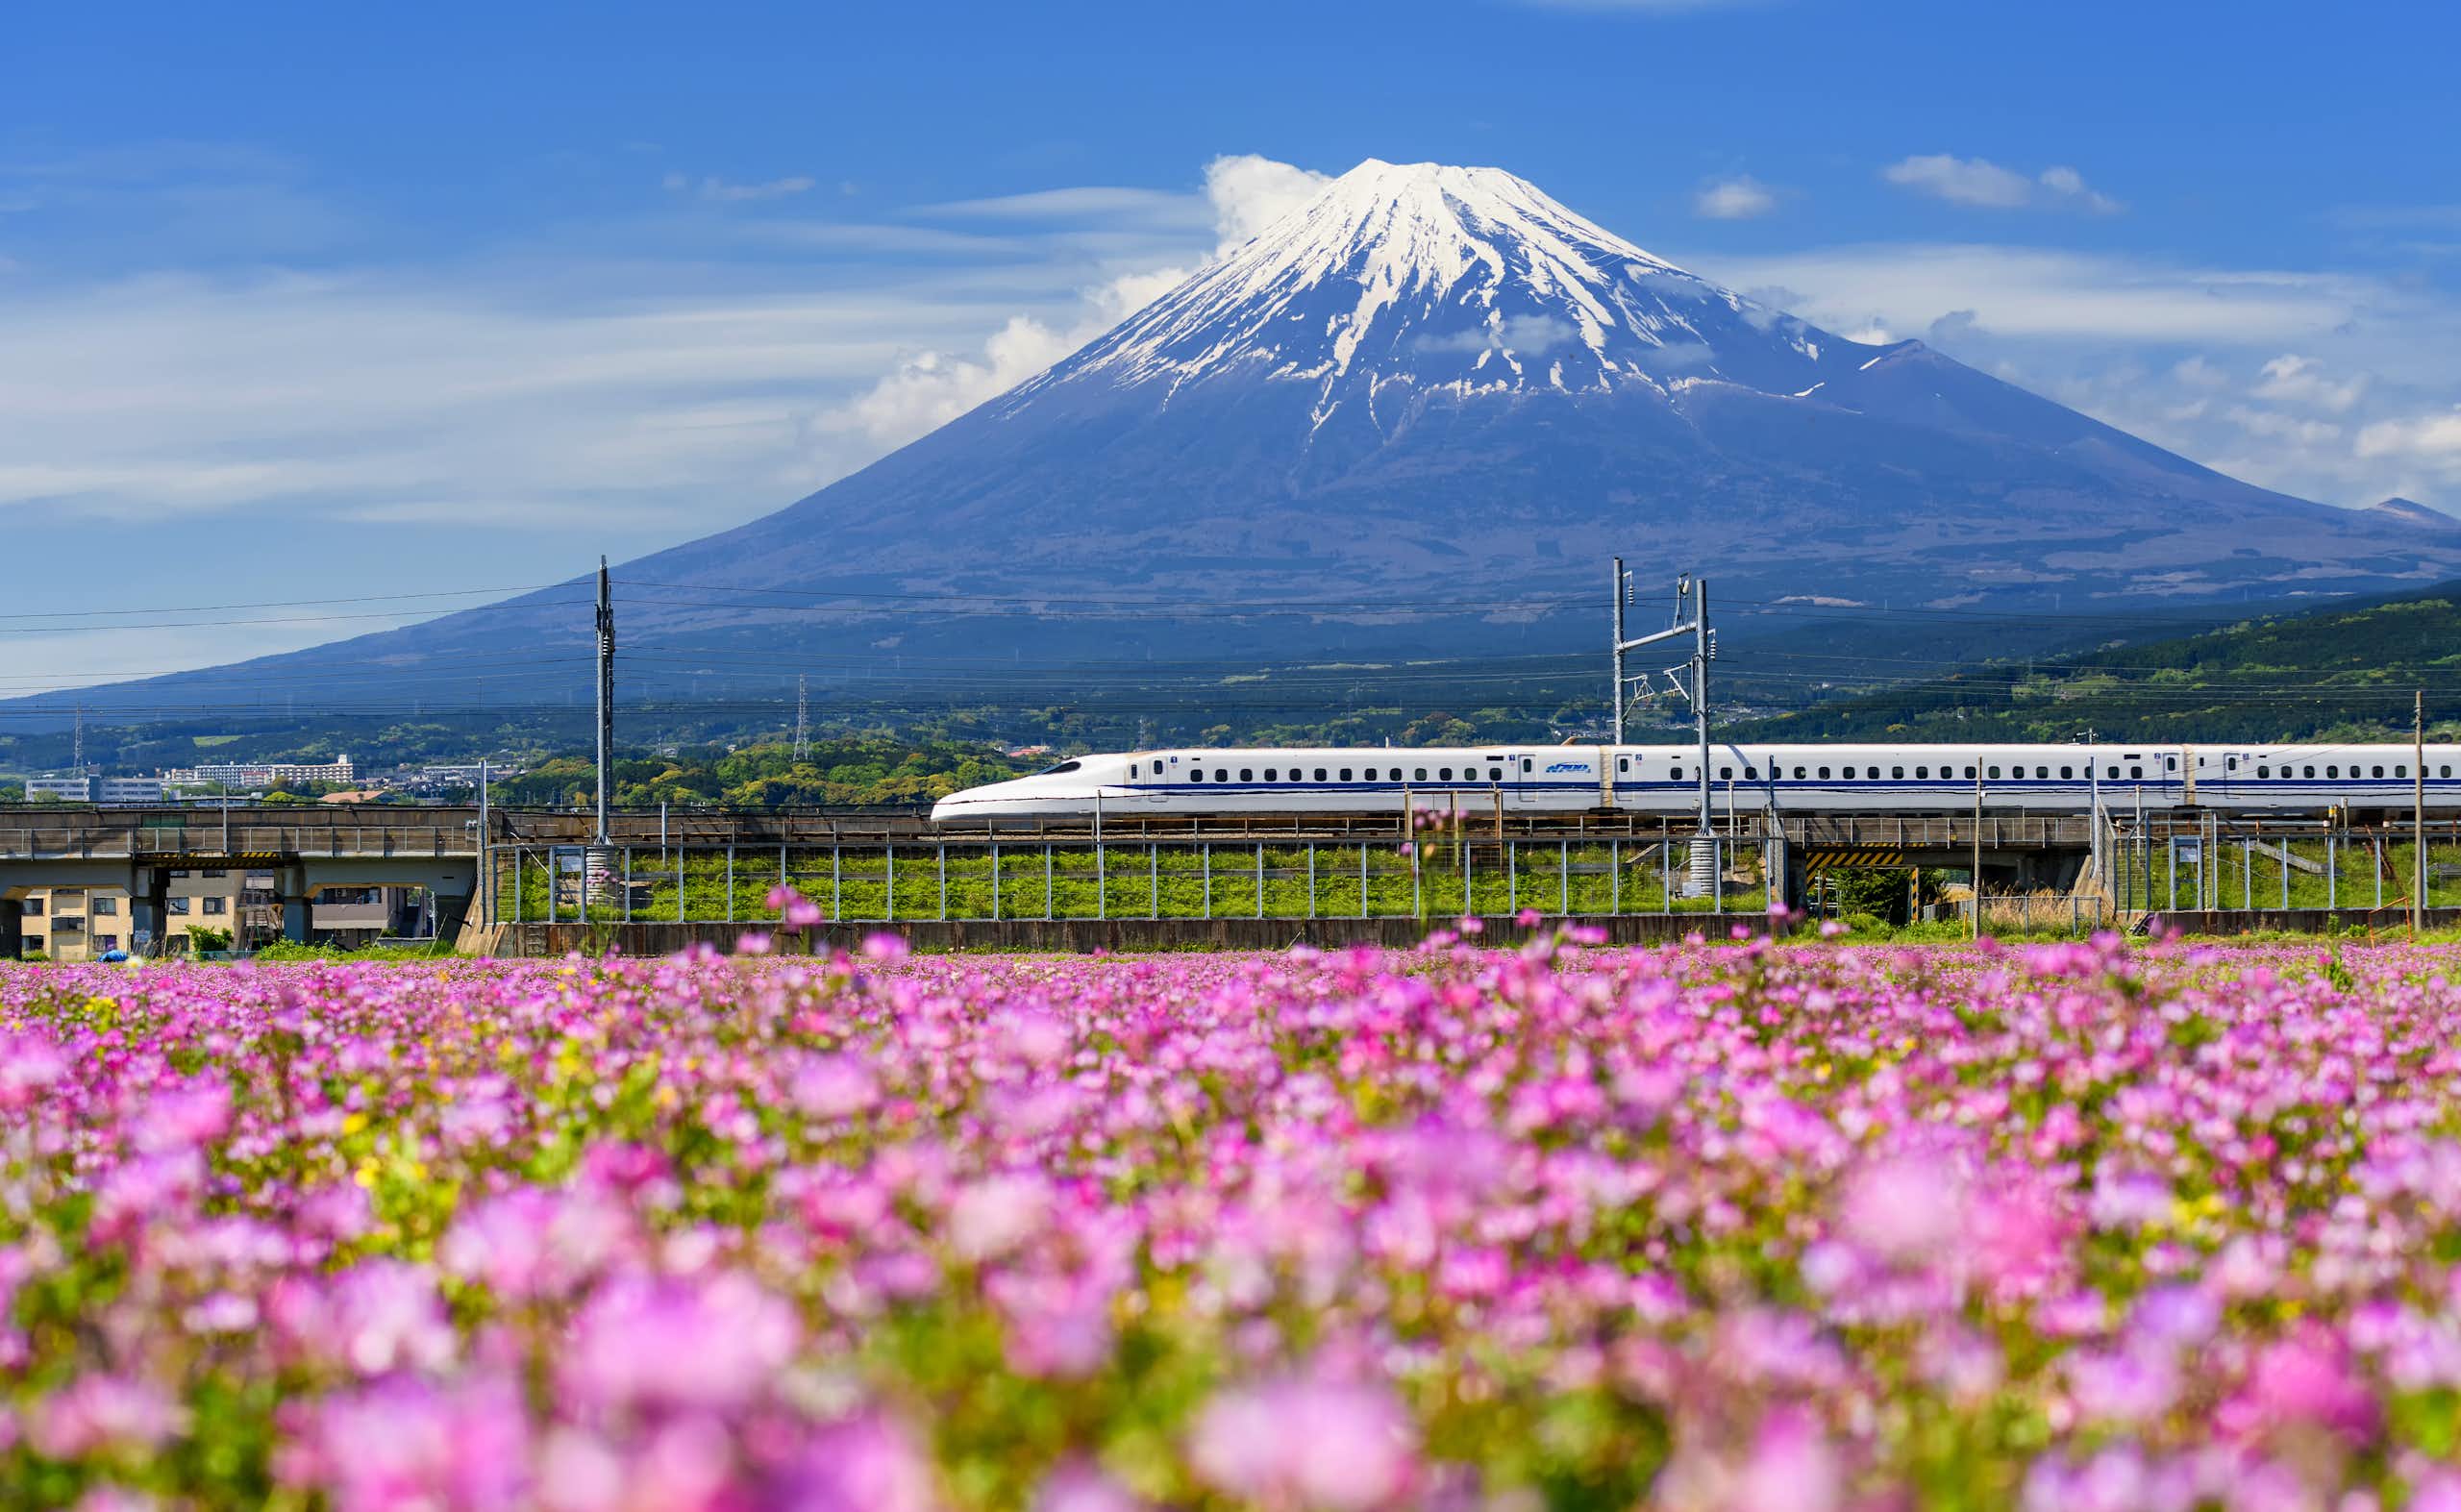 A Shinkansen bullet train running past Mount Fuji in Japan.